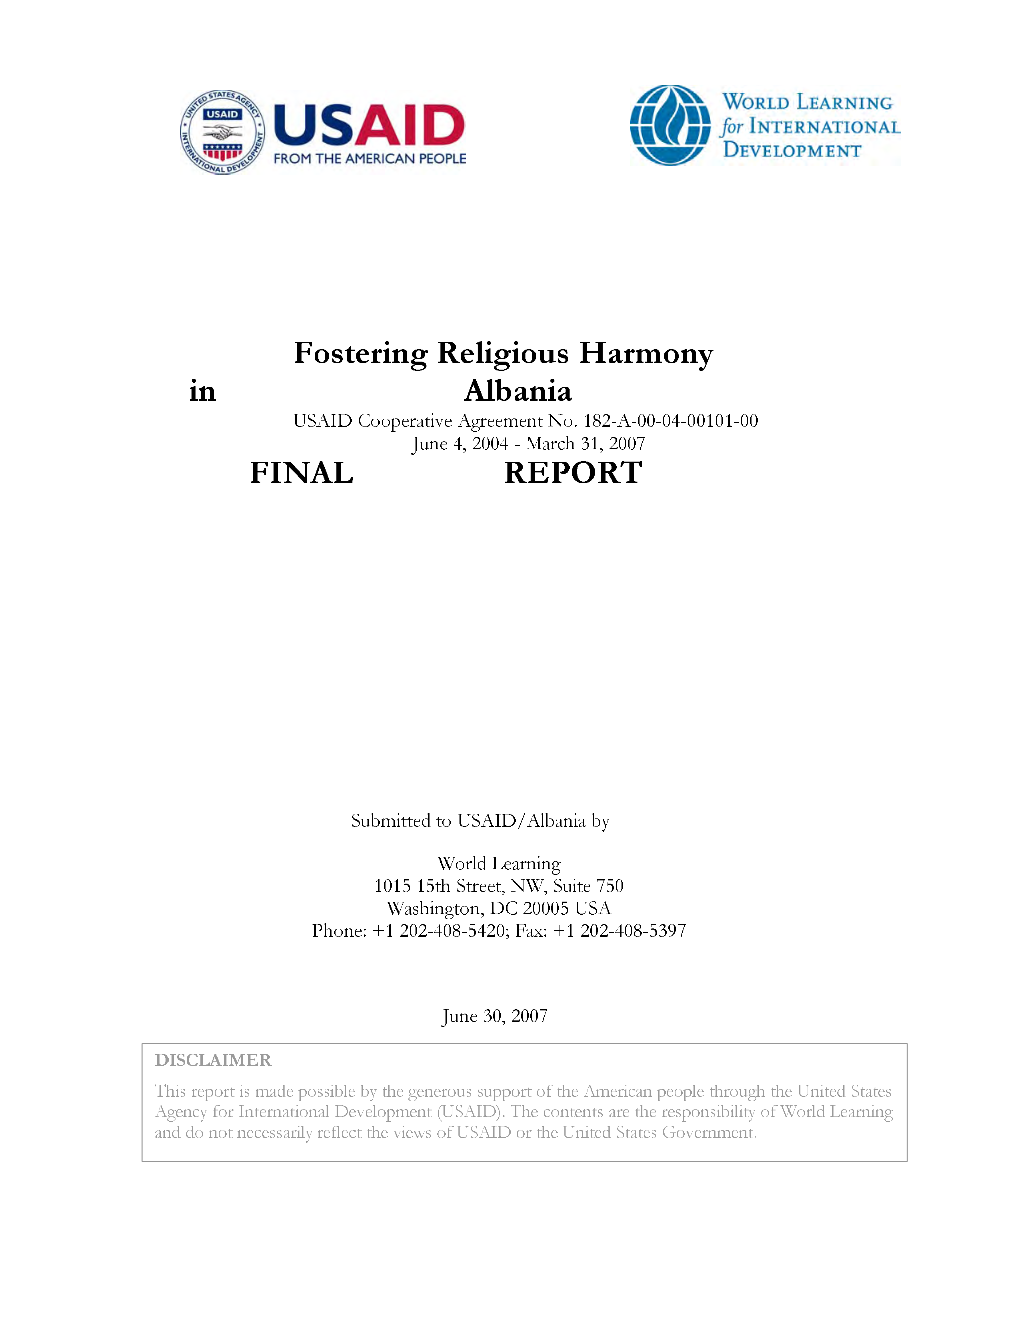 Fostering Religious Harmony in Albania FINAL REPORT